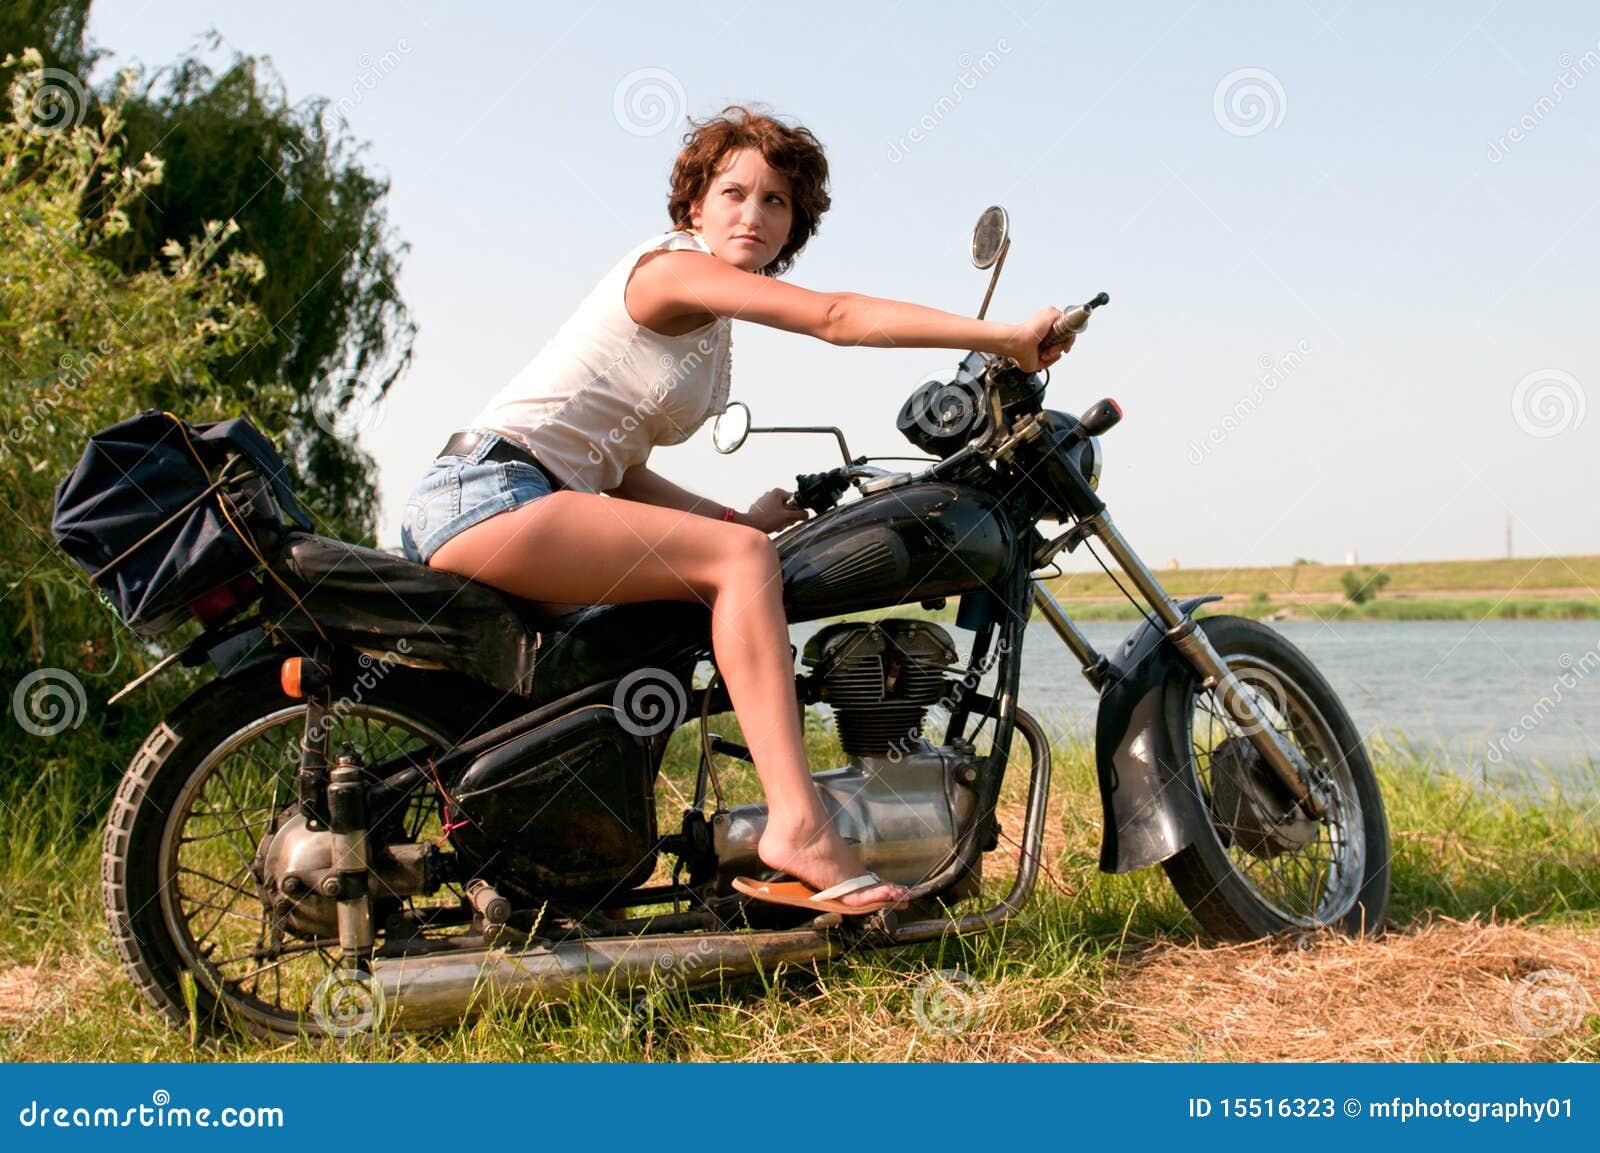 carolyn denney share motorcycle girl pics photos